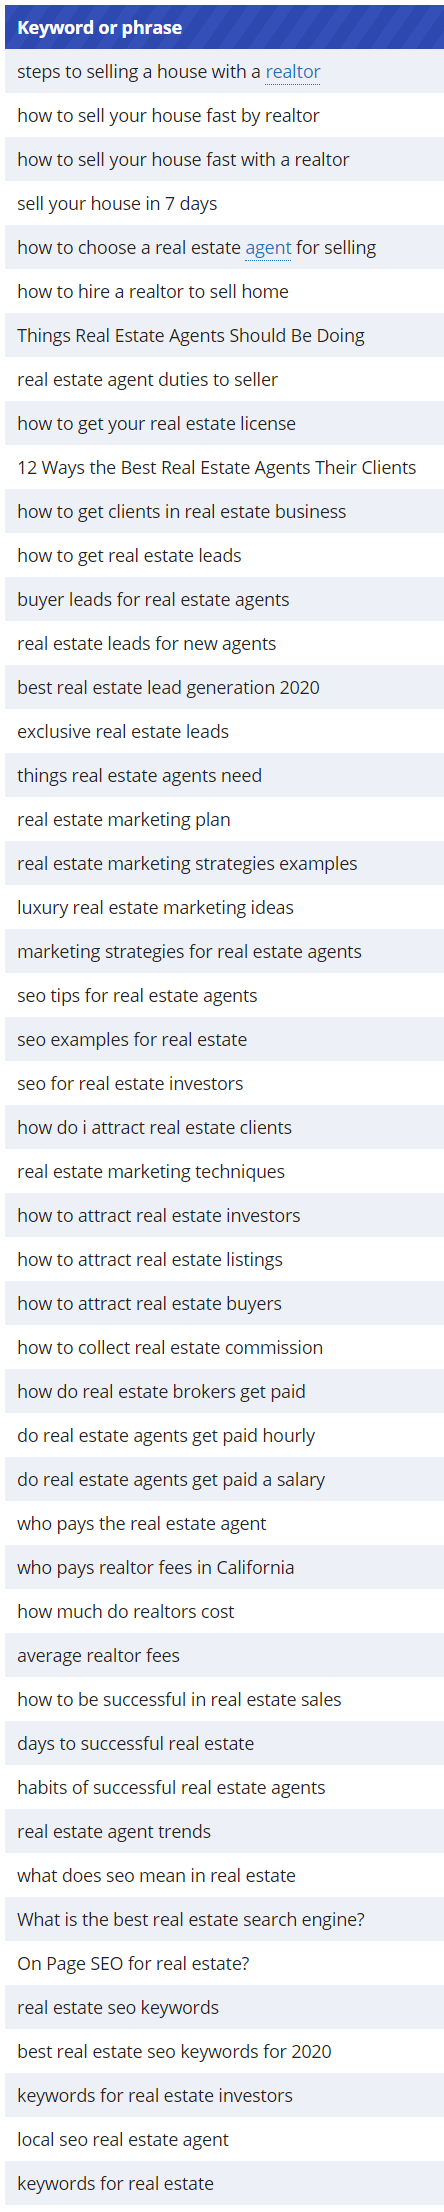 realtyna real estate seo keywords 2020 3